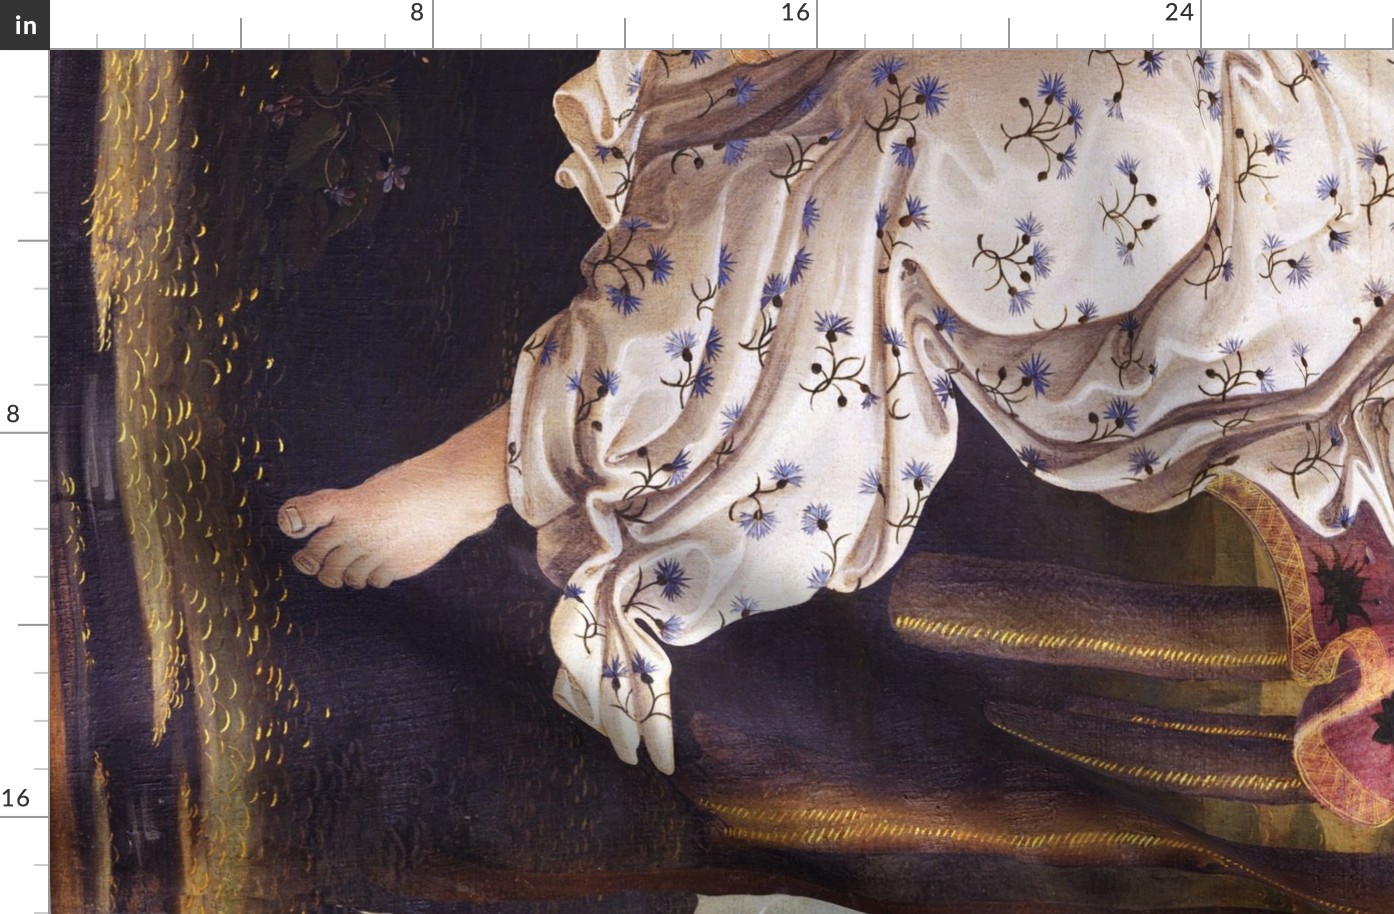 3 YARDS long repeat: Sandro Botticelli - Birth of Venus